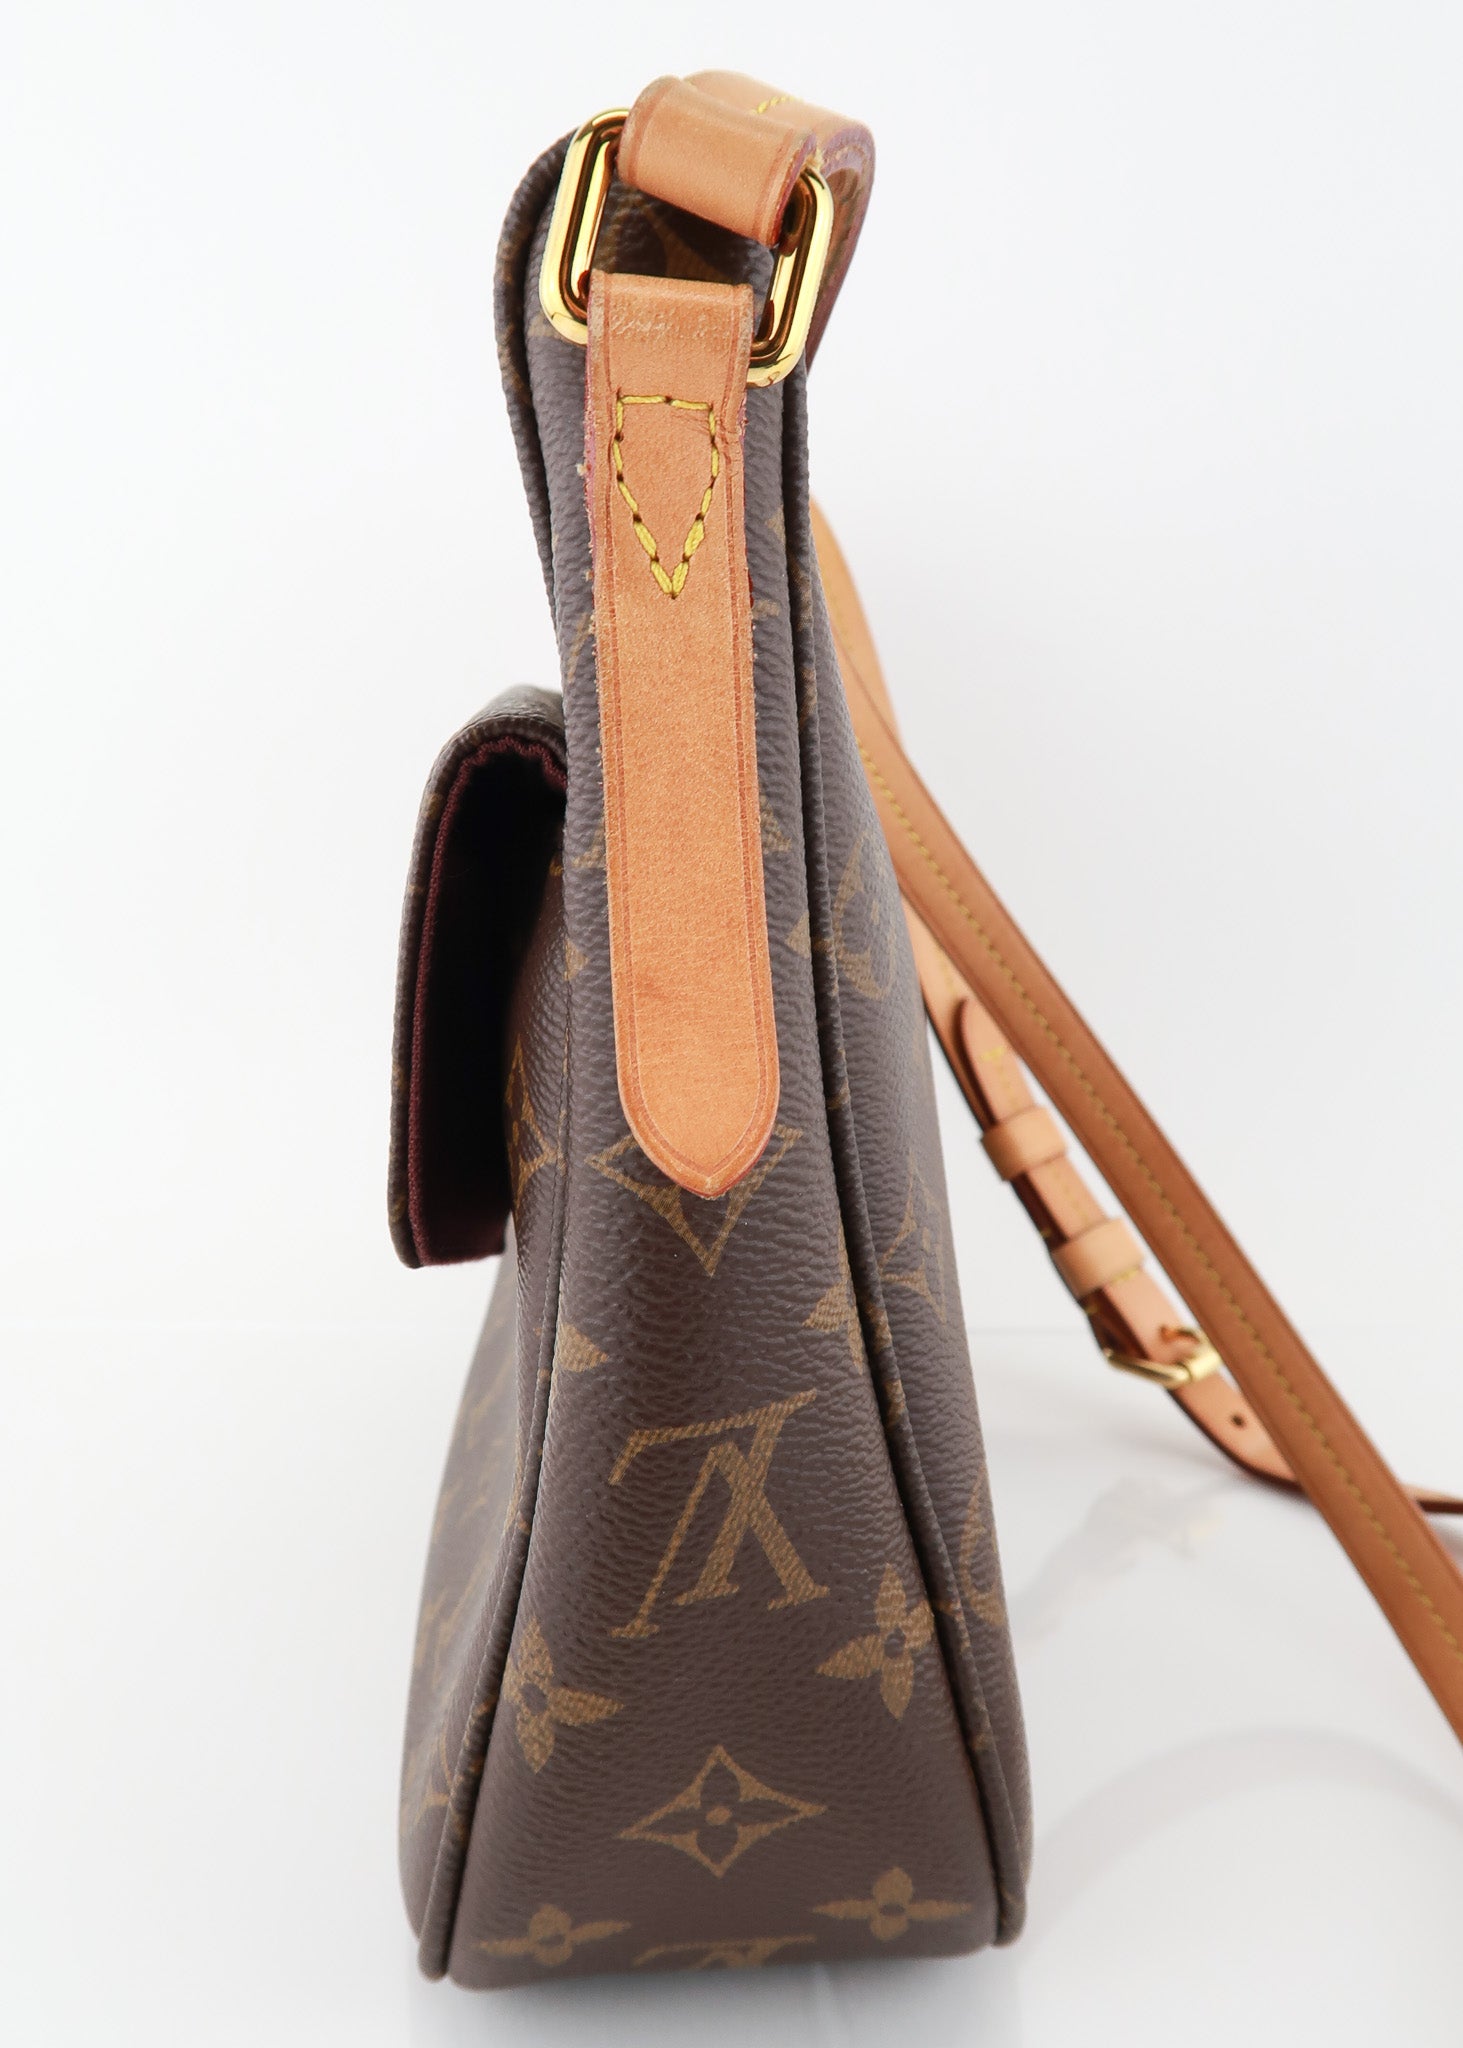 Louis Vuitton, Bags, Louis Vuitton Monogram Mabillon